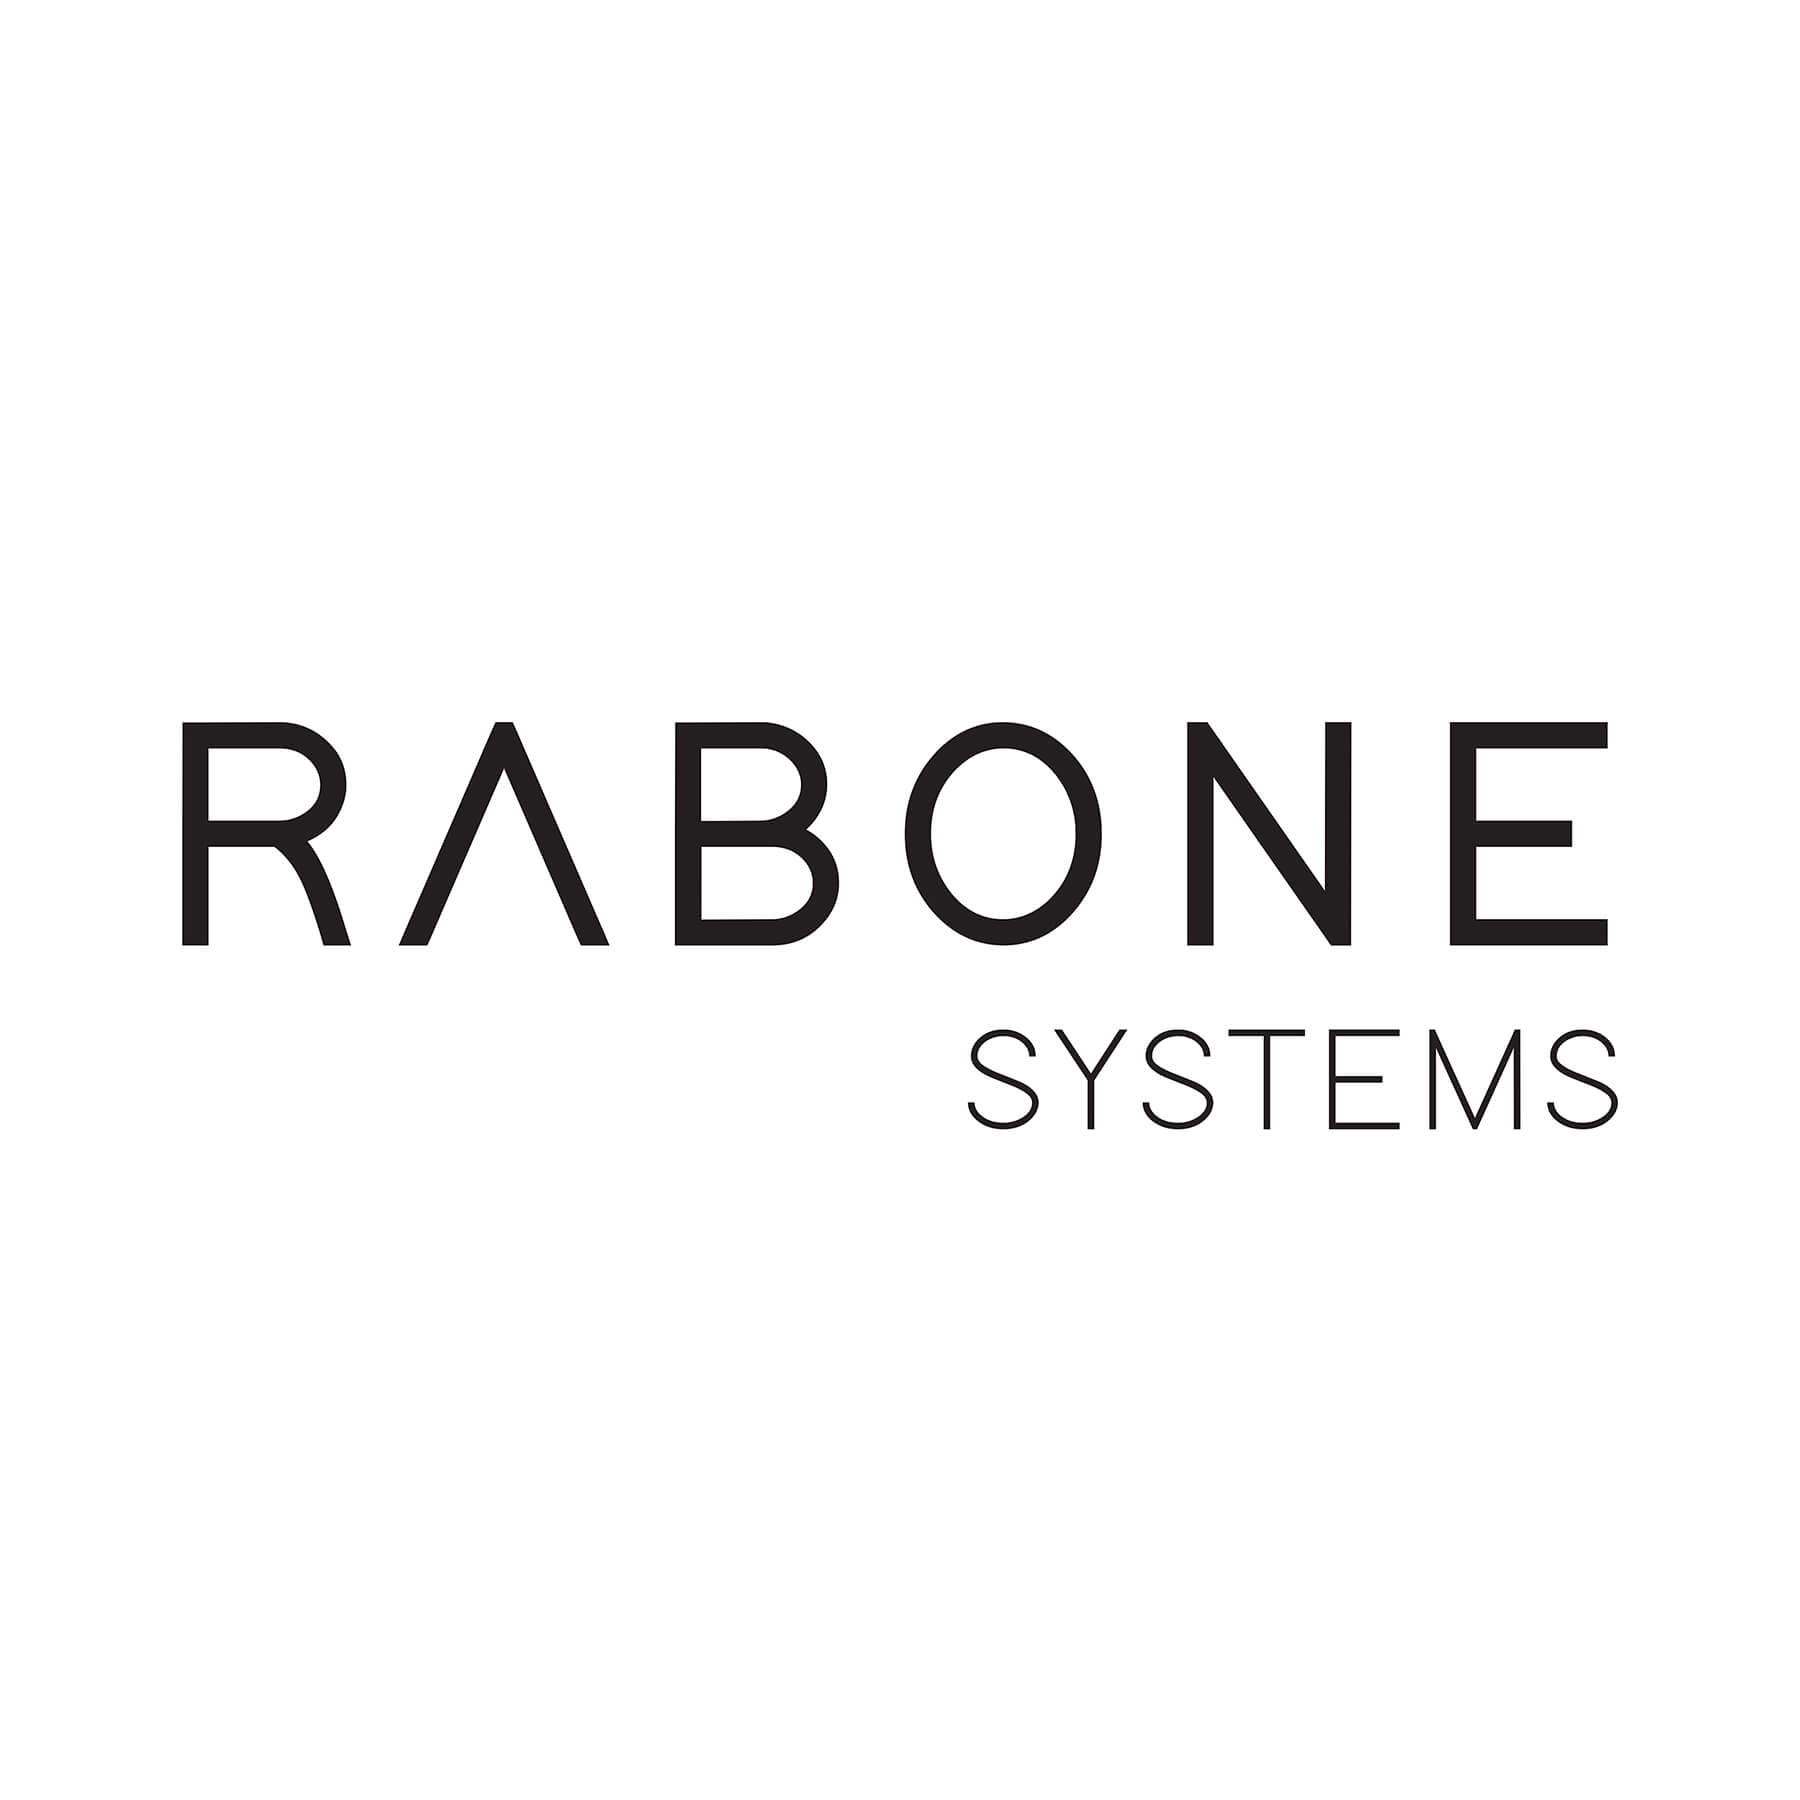 Rabone Systems